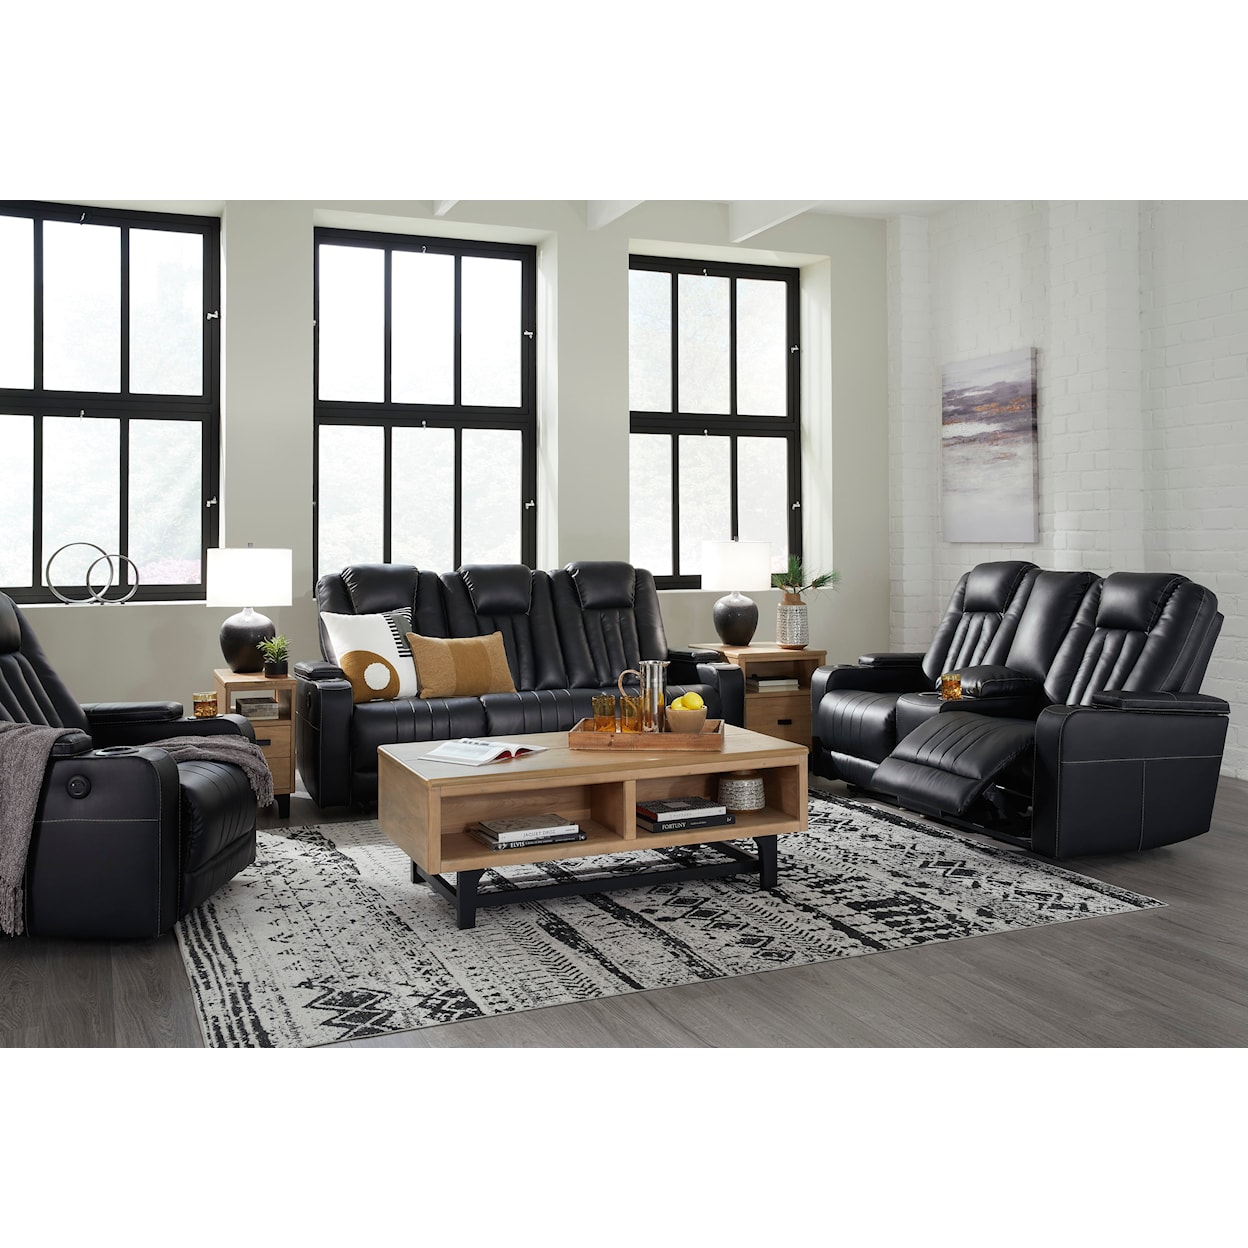 Signature Design by Ashley Furniture Center Point Living Room Set